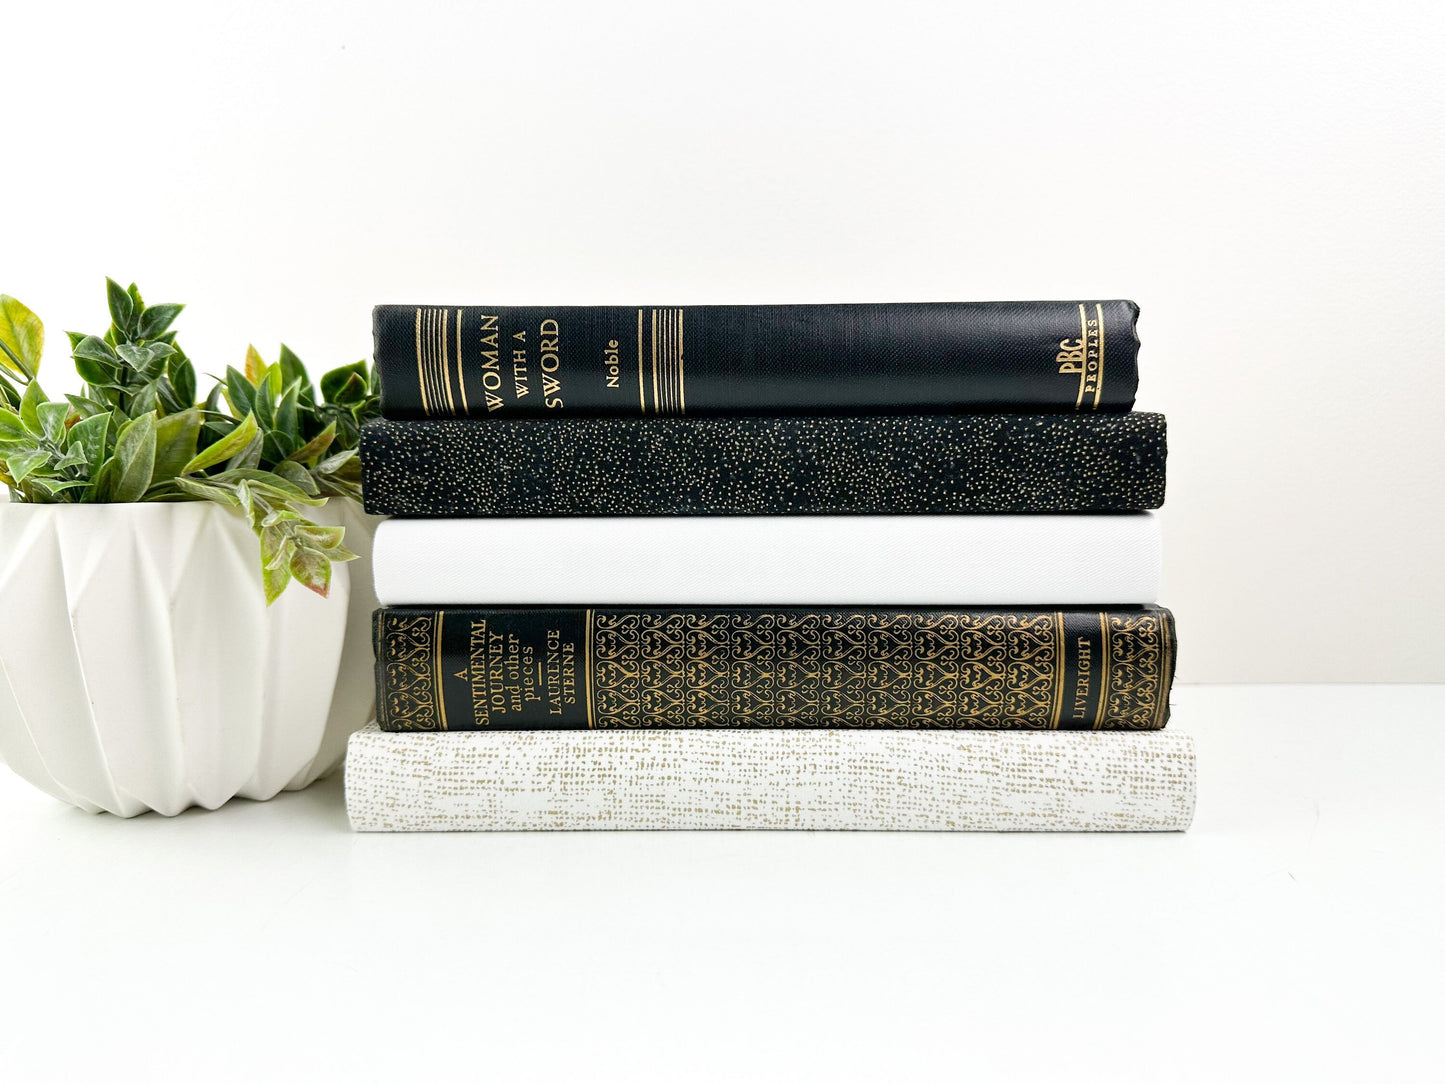 Black and White Decorative Books, Shelf Decor, Modern Home Decor